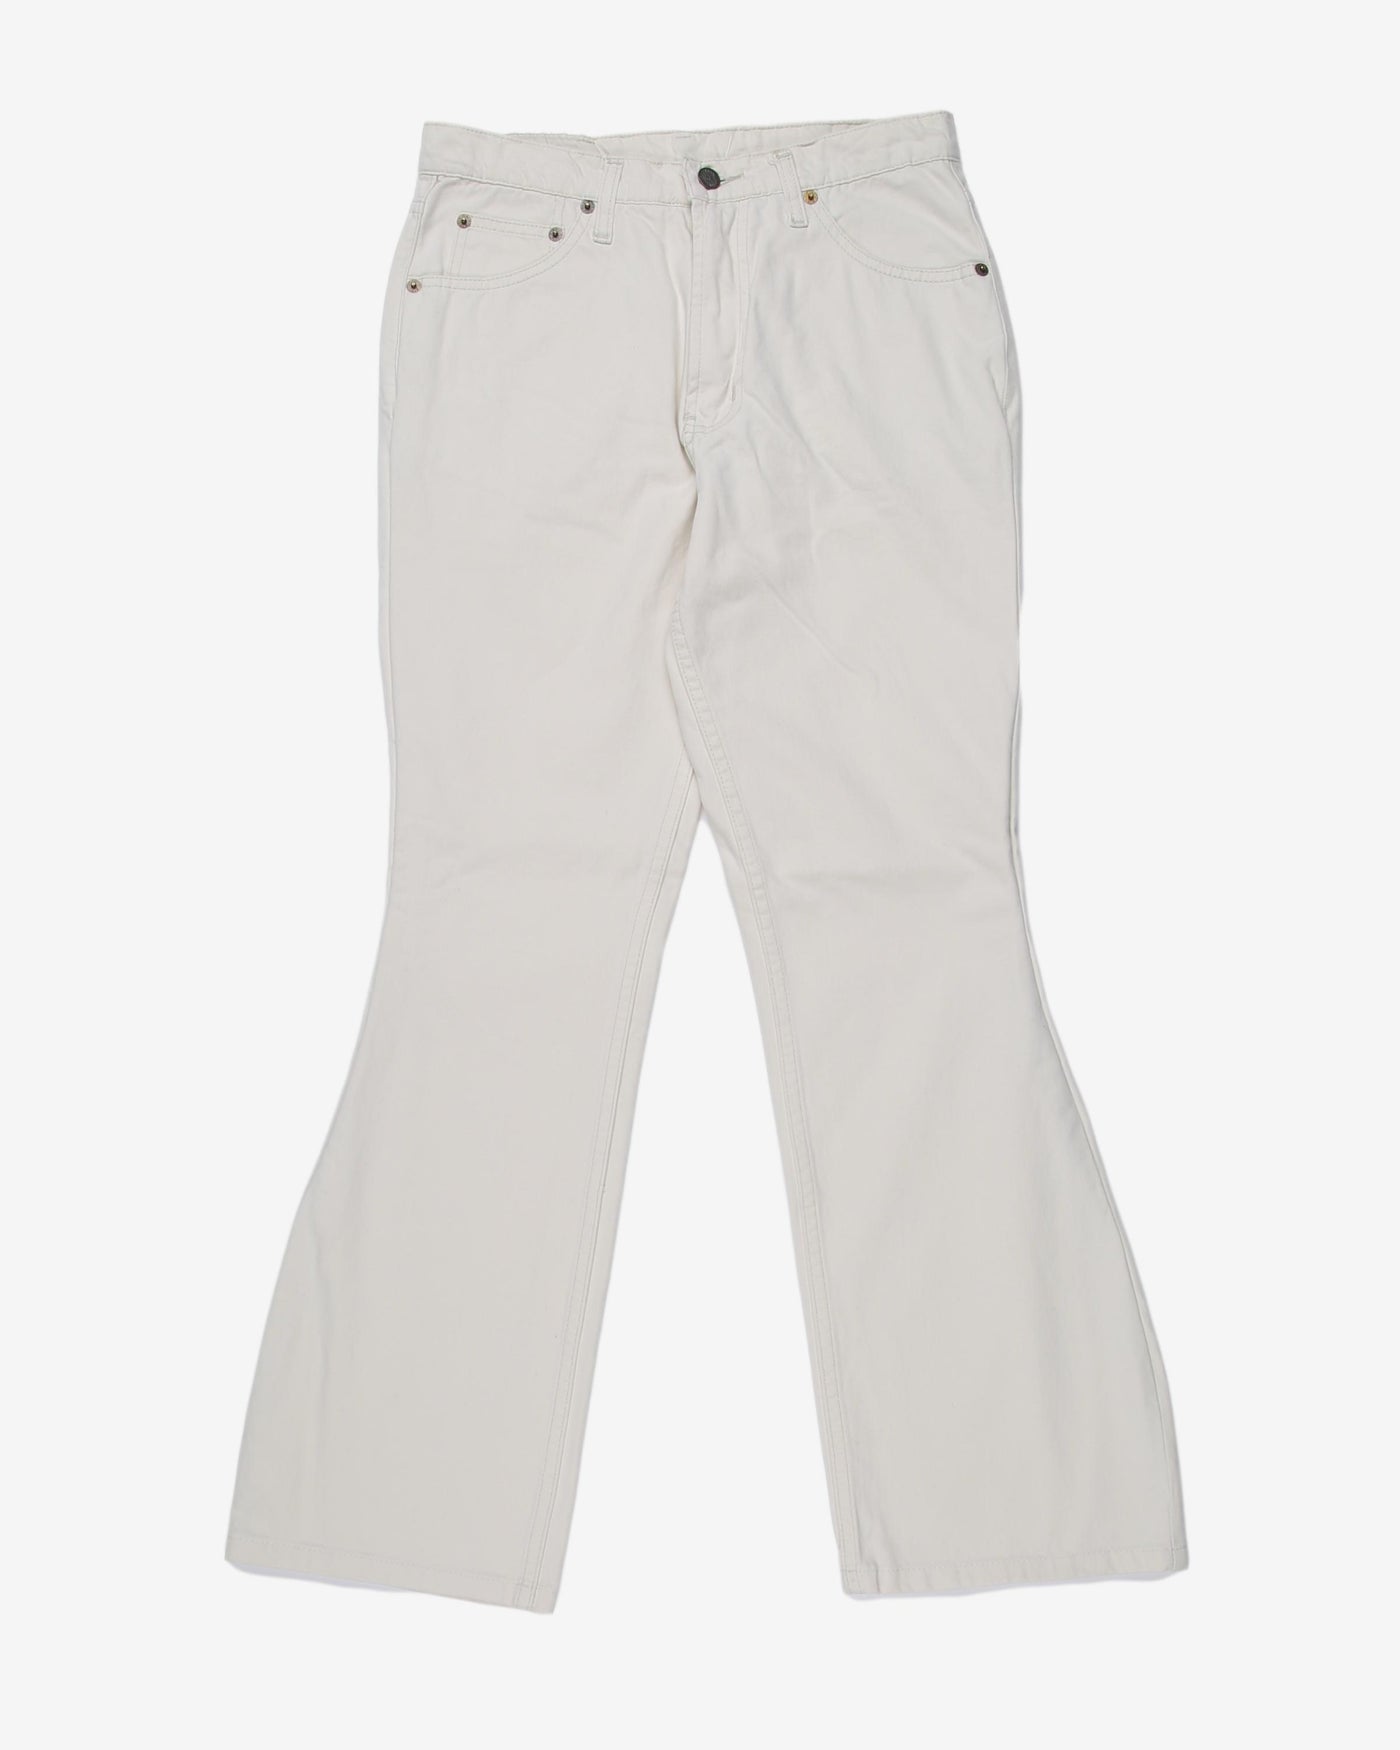 Polo jeans RRL high waisted cream white denim jeans - w29l28